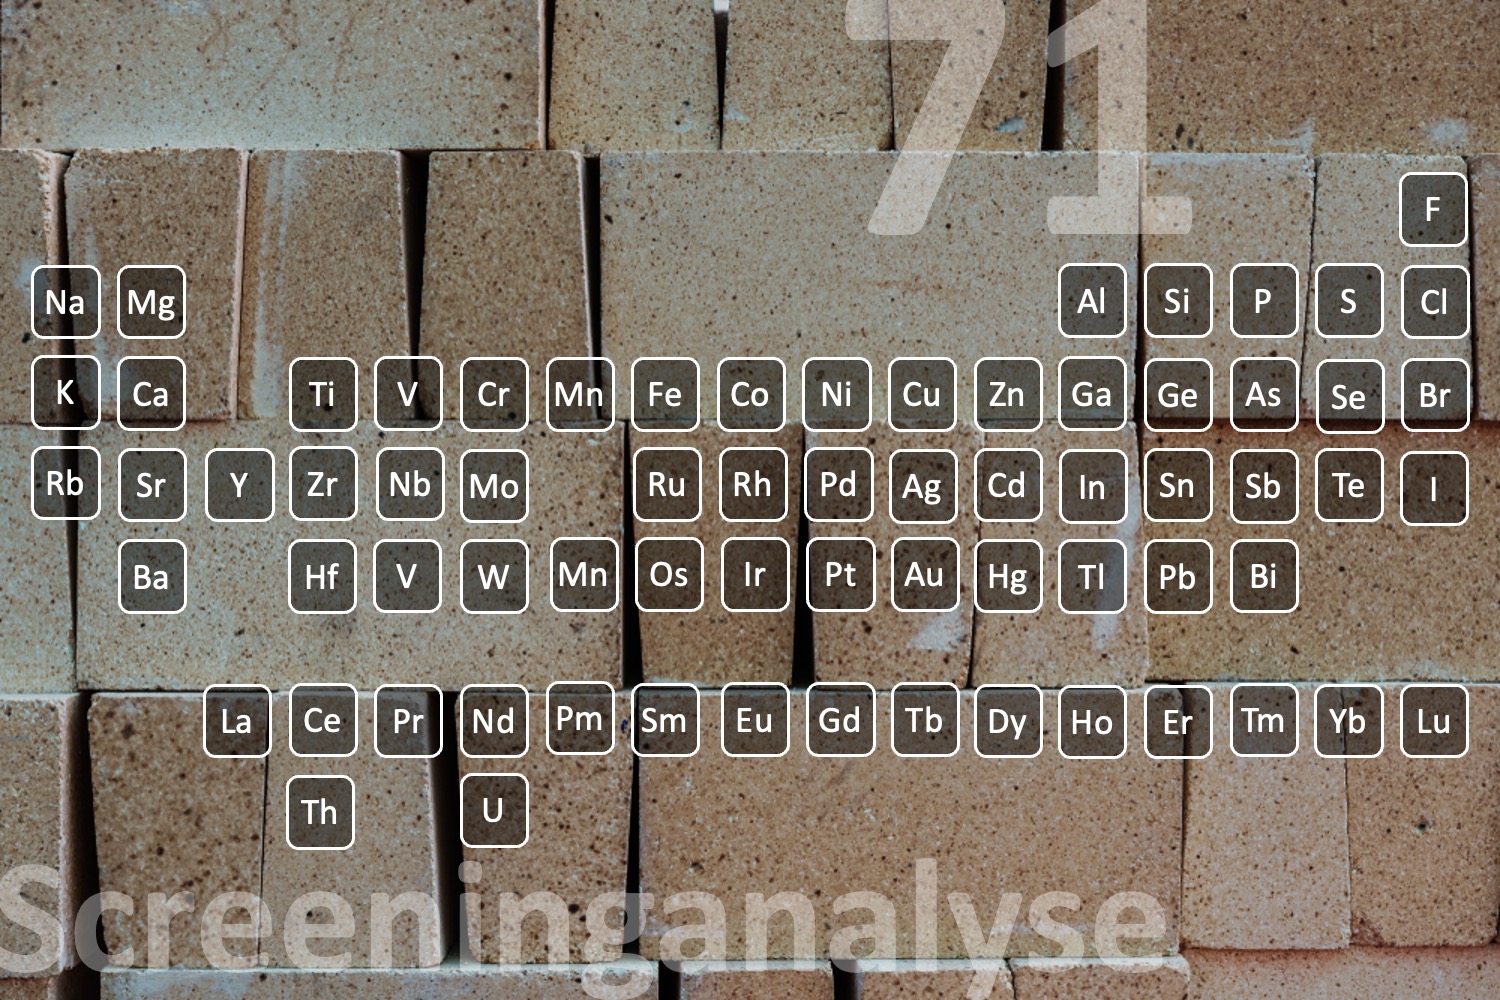 RFA-Analyse feuerfeste Materialien 71 Elemente